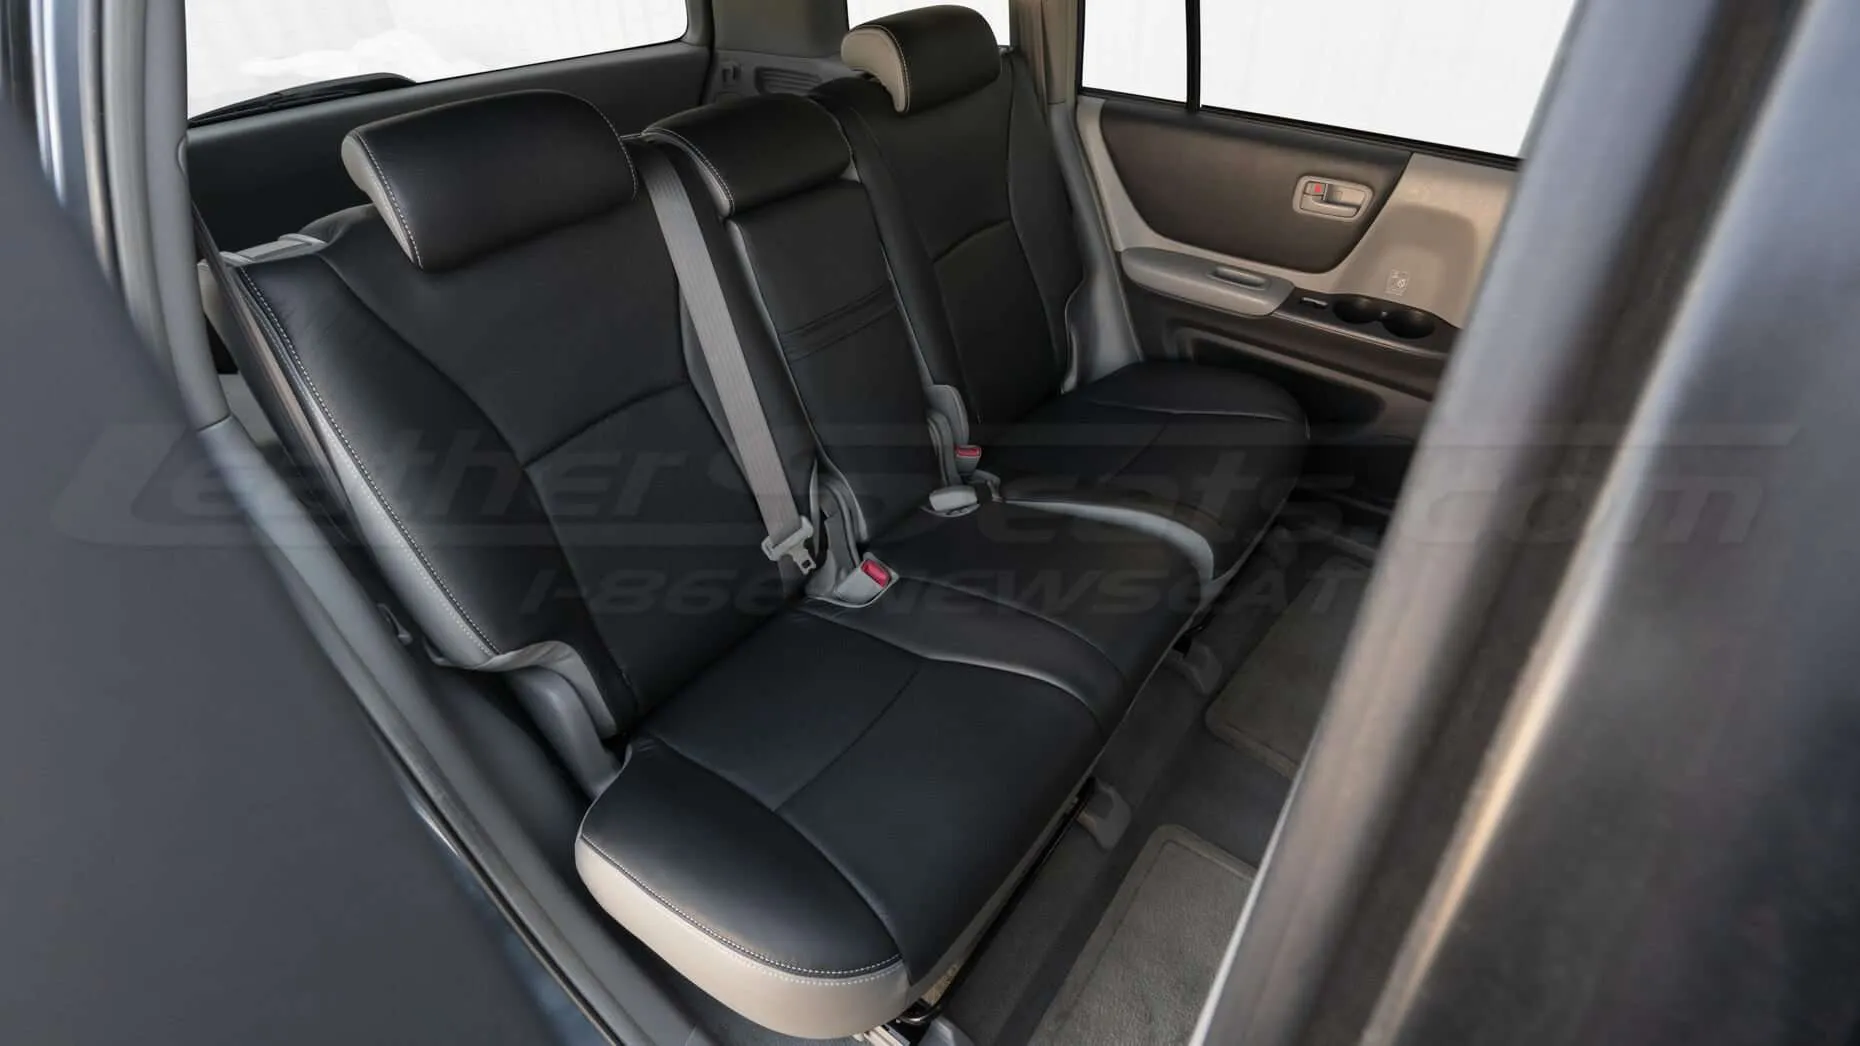 Toyota Highlander Installed Leather Seats - Ash & Dark Graphite - Rear seats from passenger side